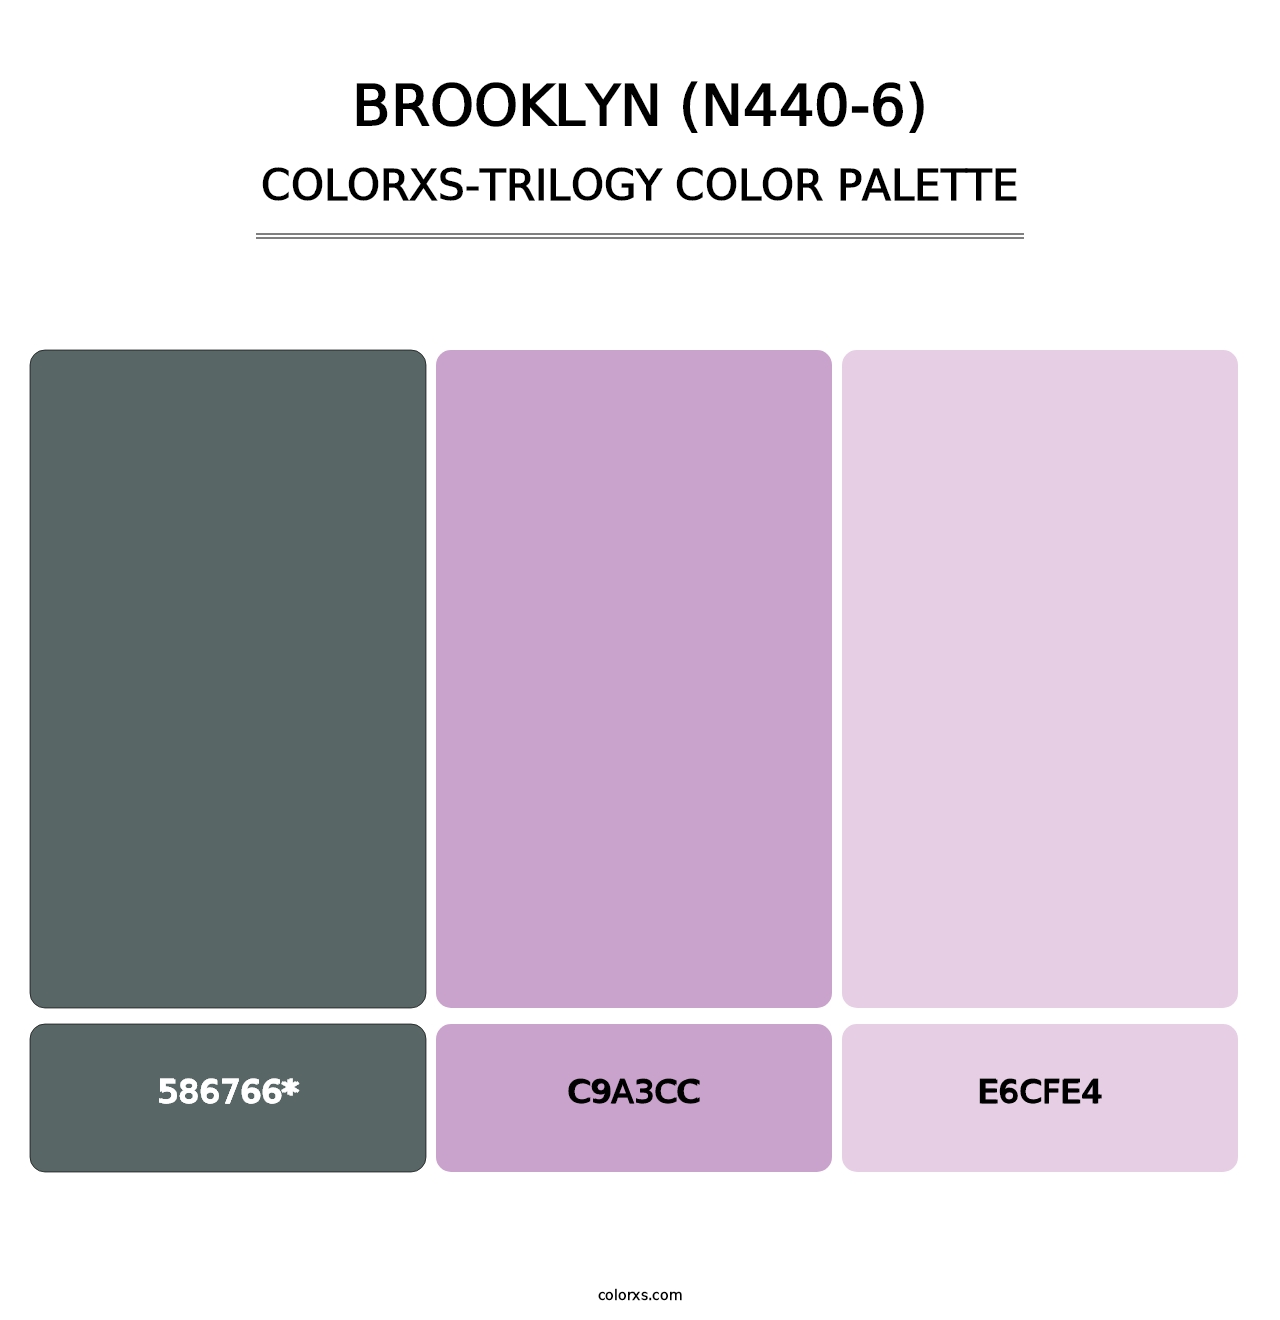 Brooklyn (N440-6) - Colorxs Trilogy Palette